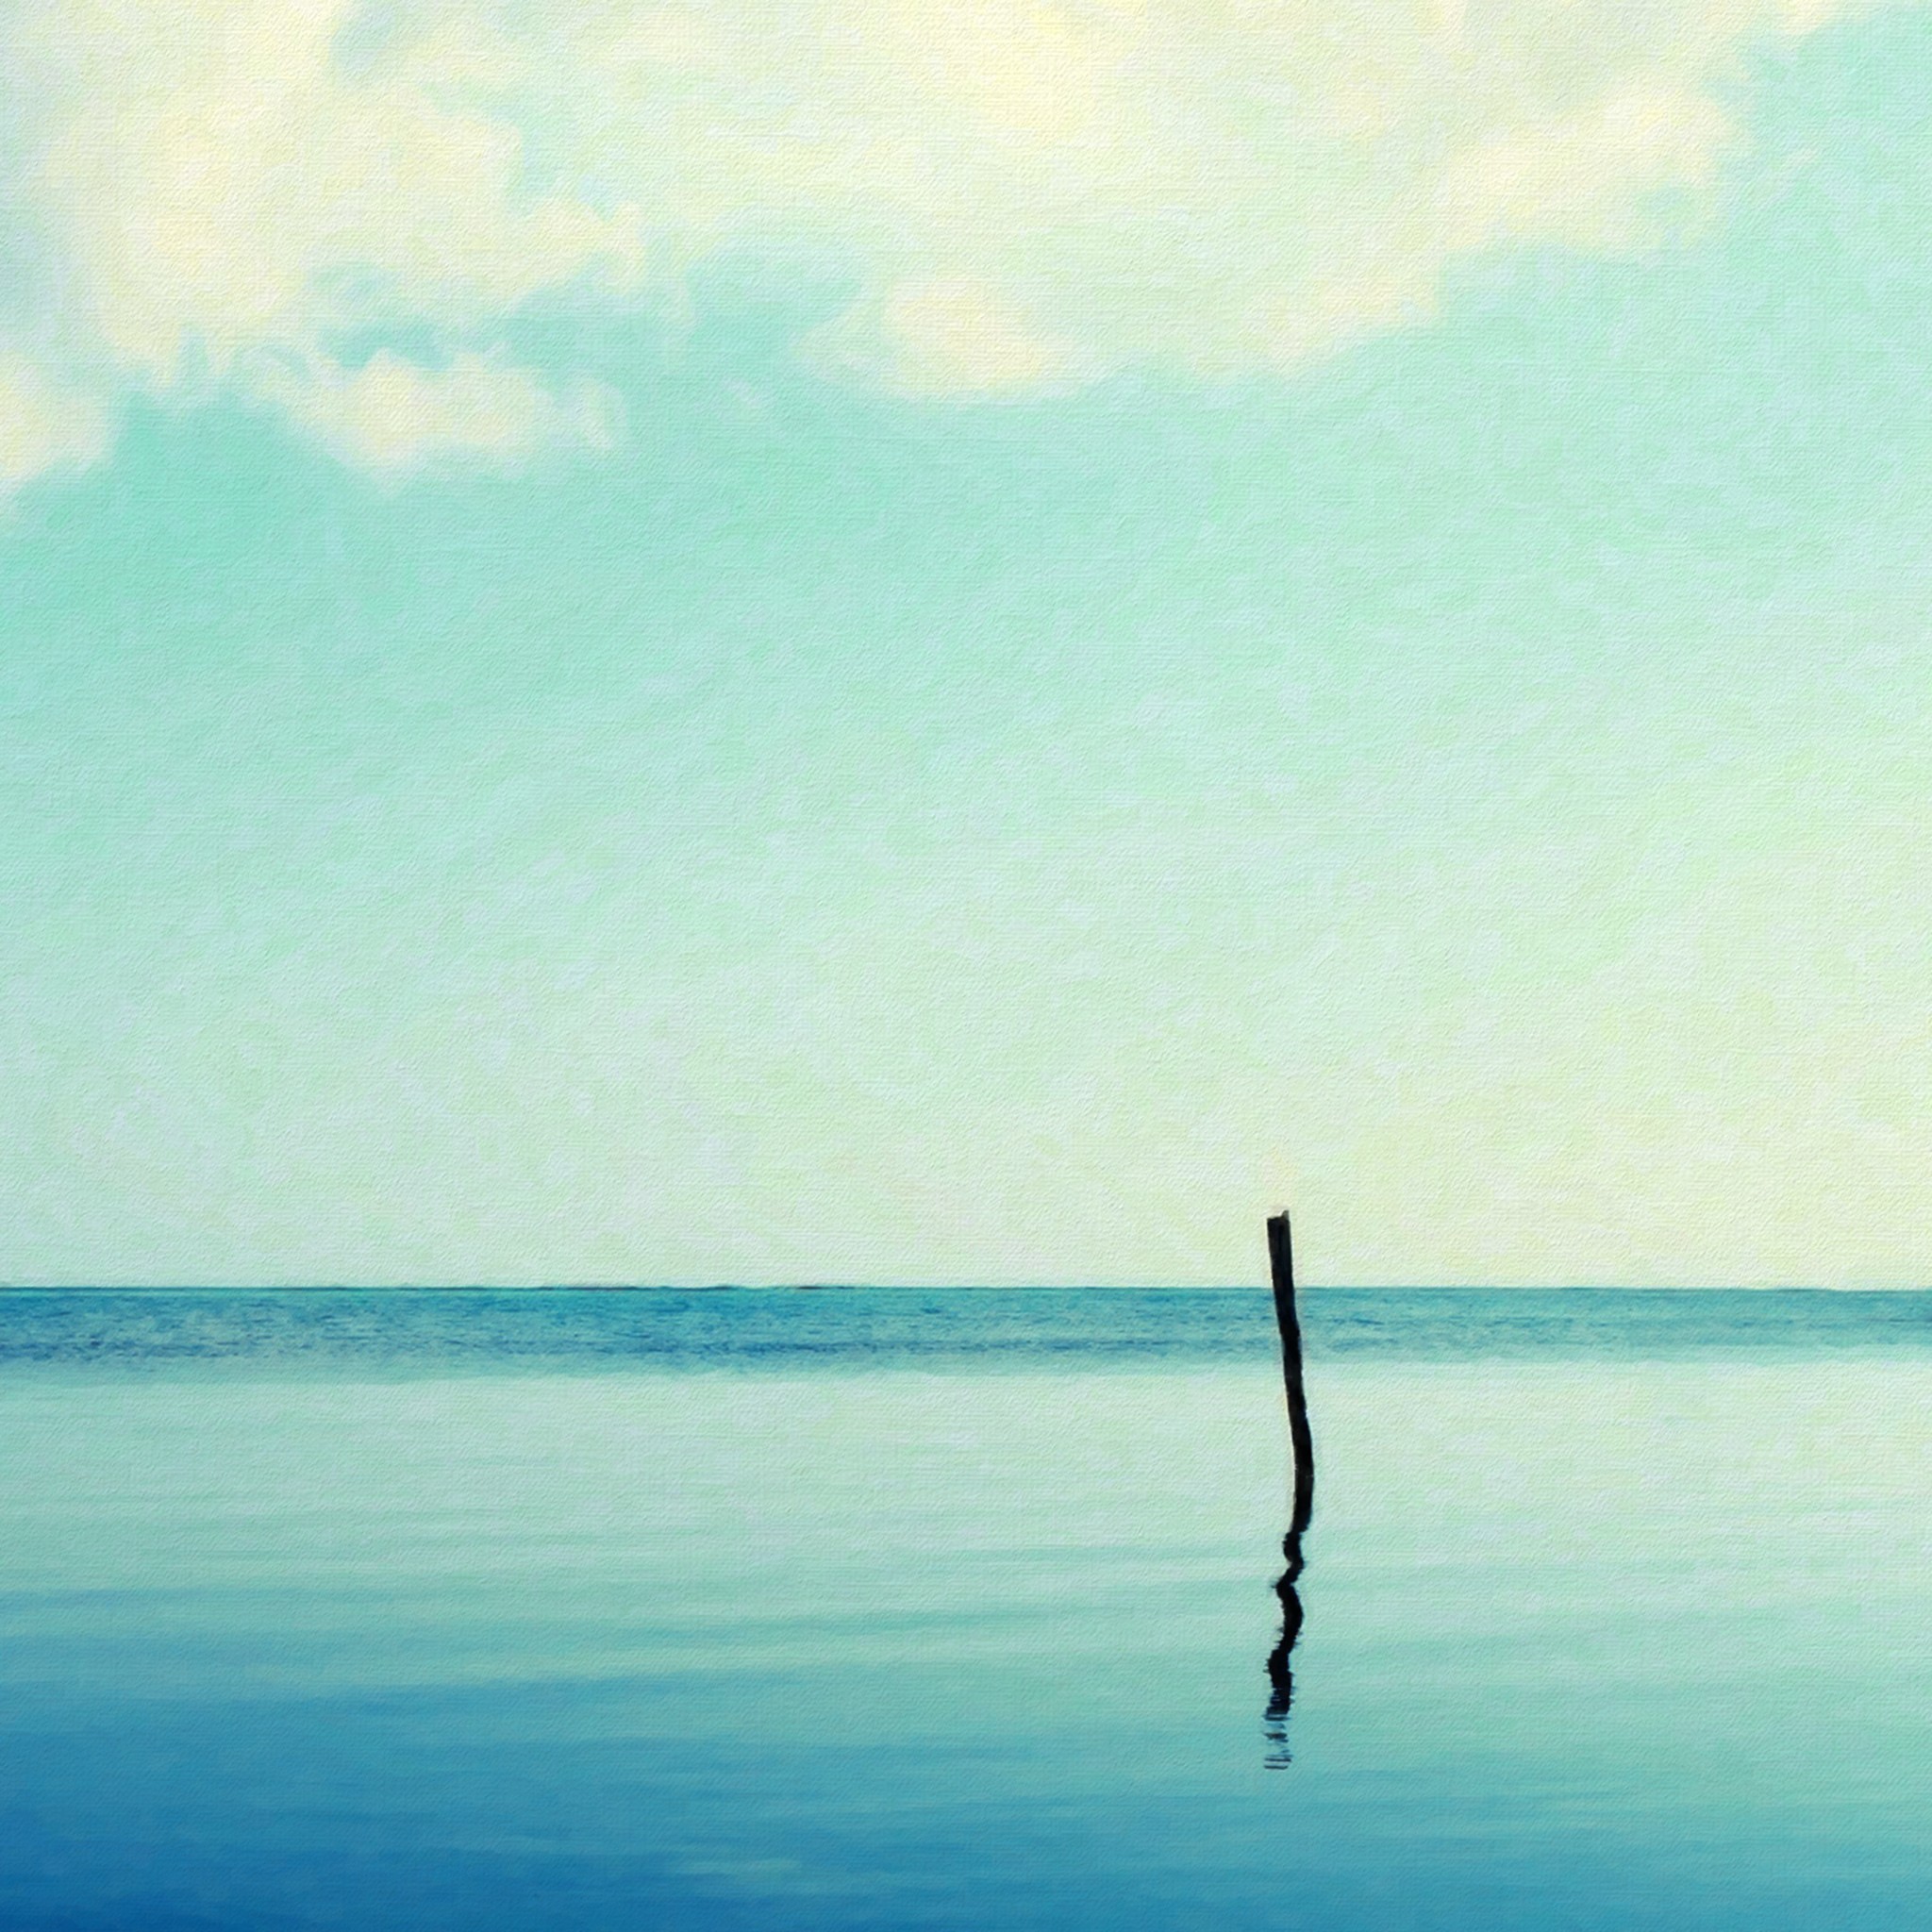 2048x2048 1059 2: Nature Calm Peaceful Ocean Sea Skyline Scenery iPad wallpaper